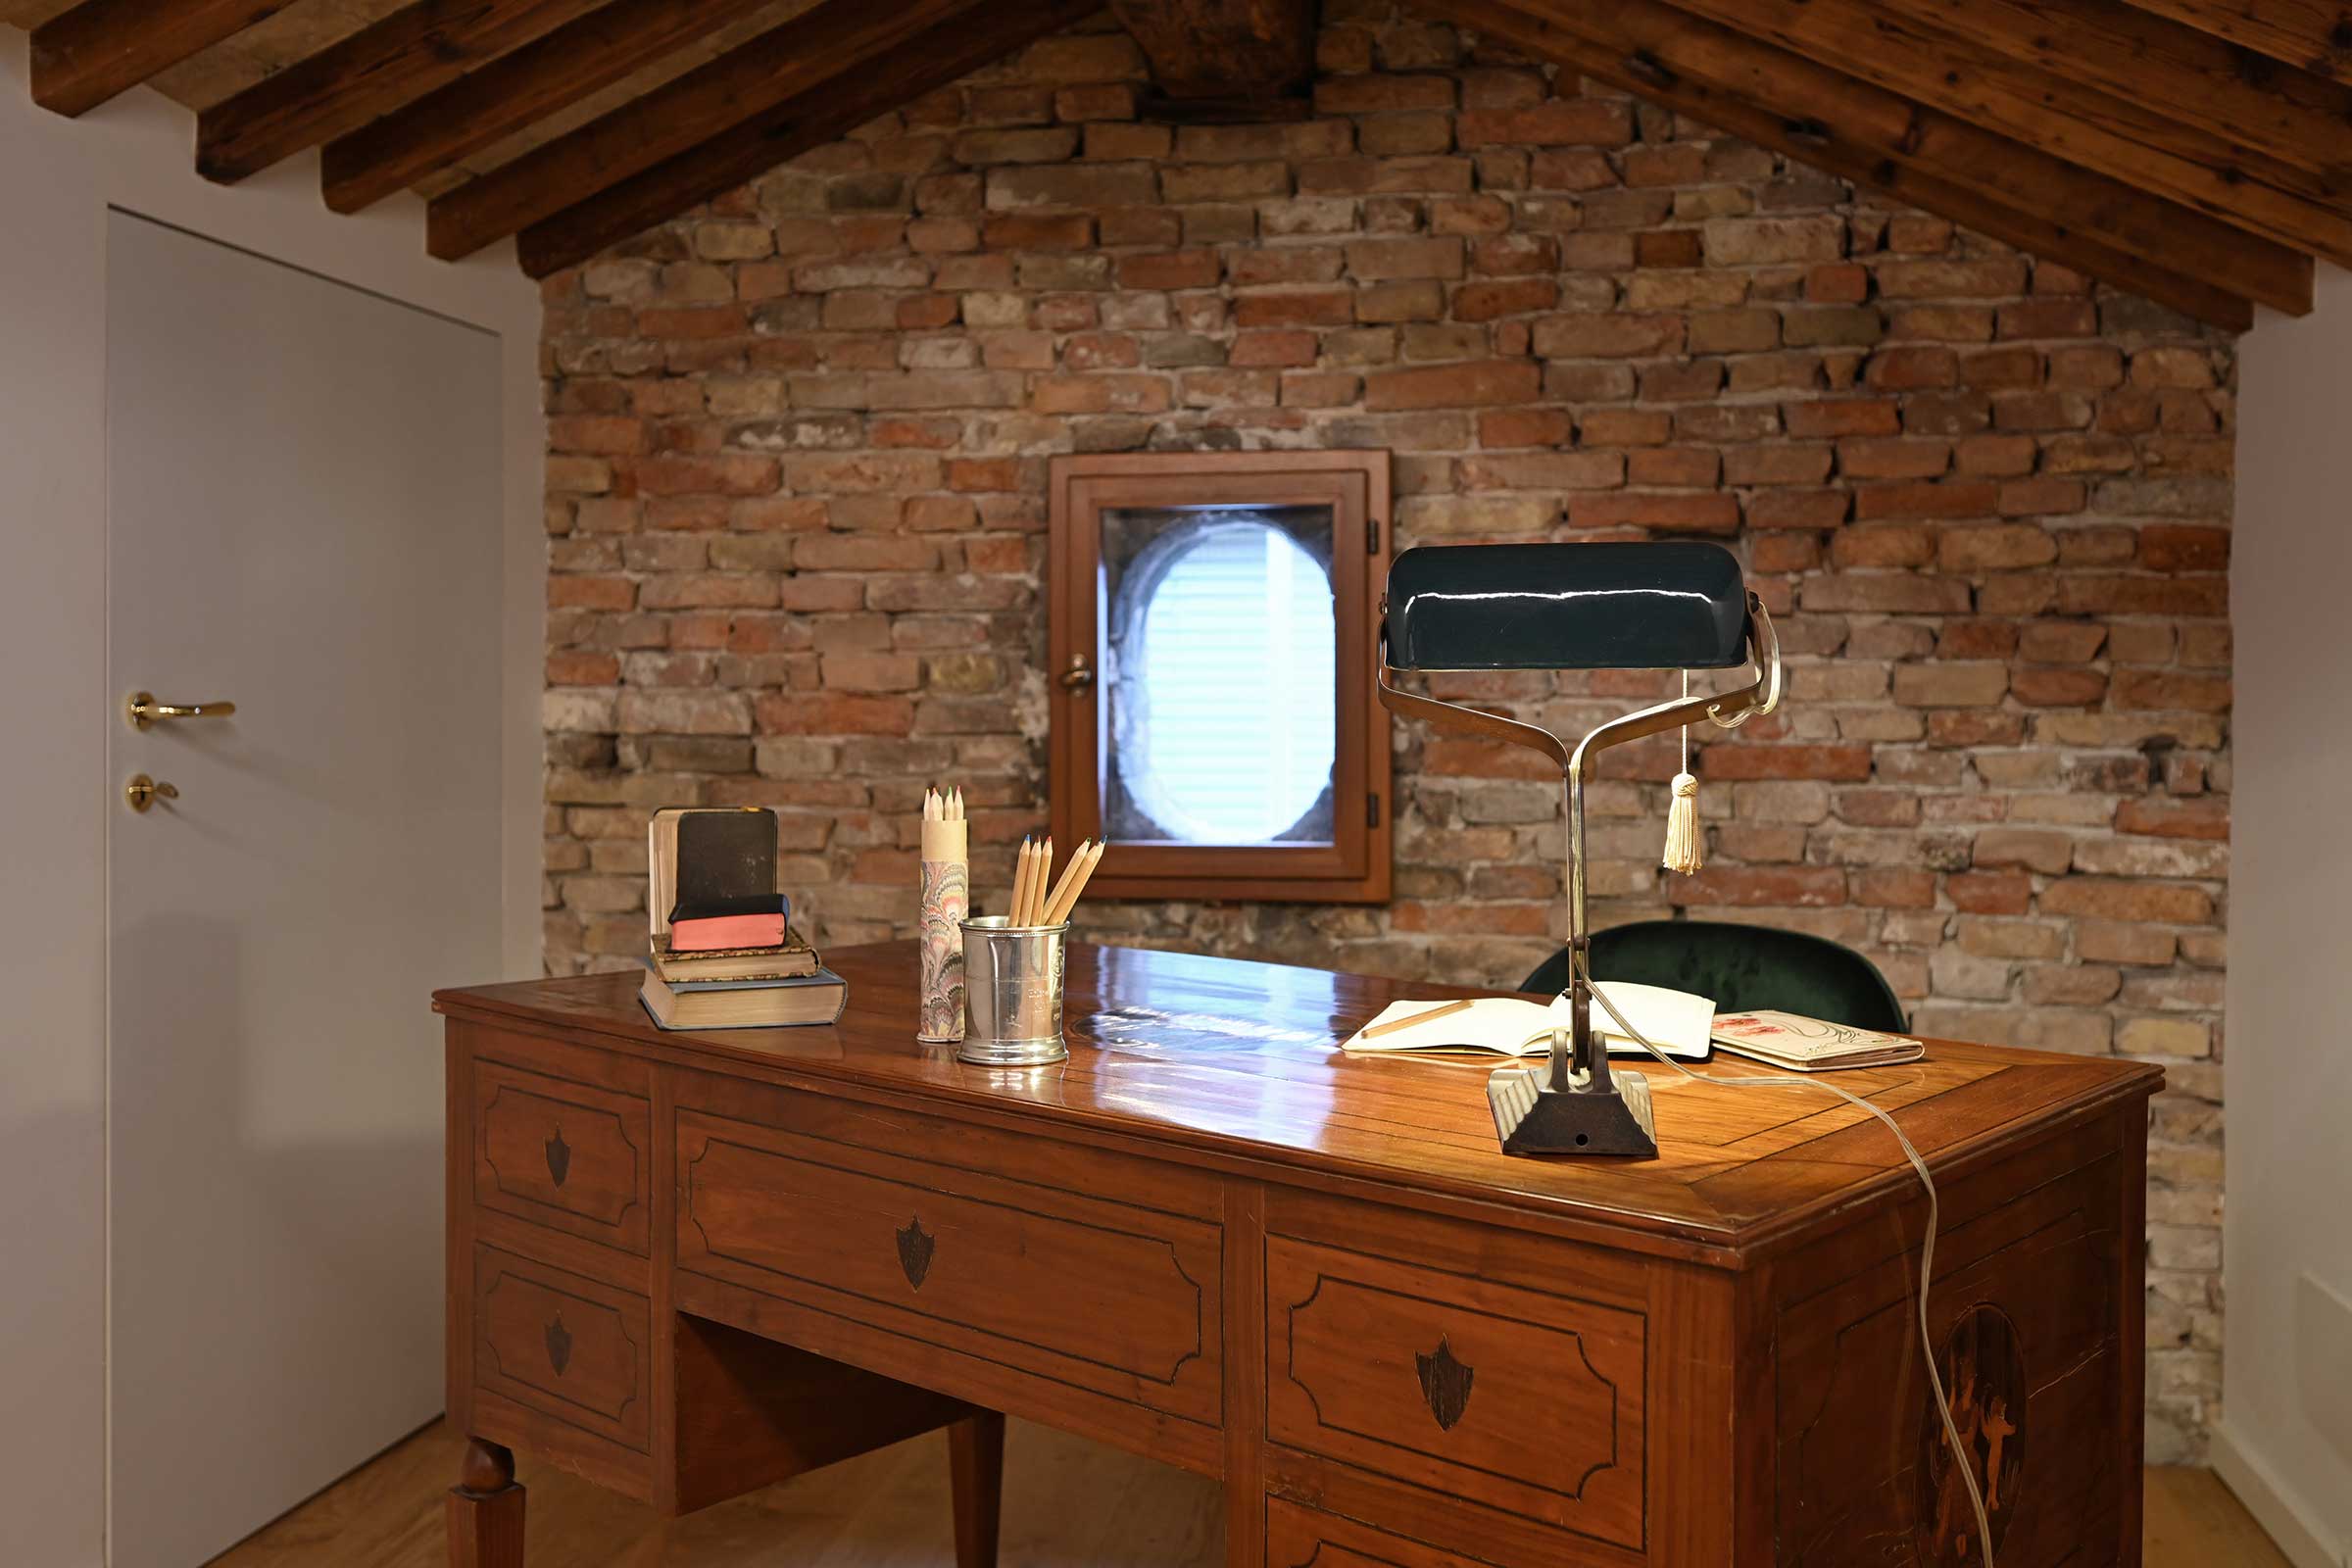 studio / office corner in the attic with antique desk